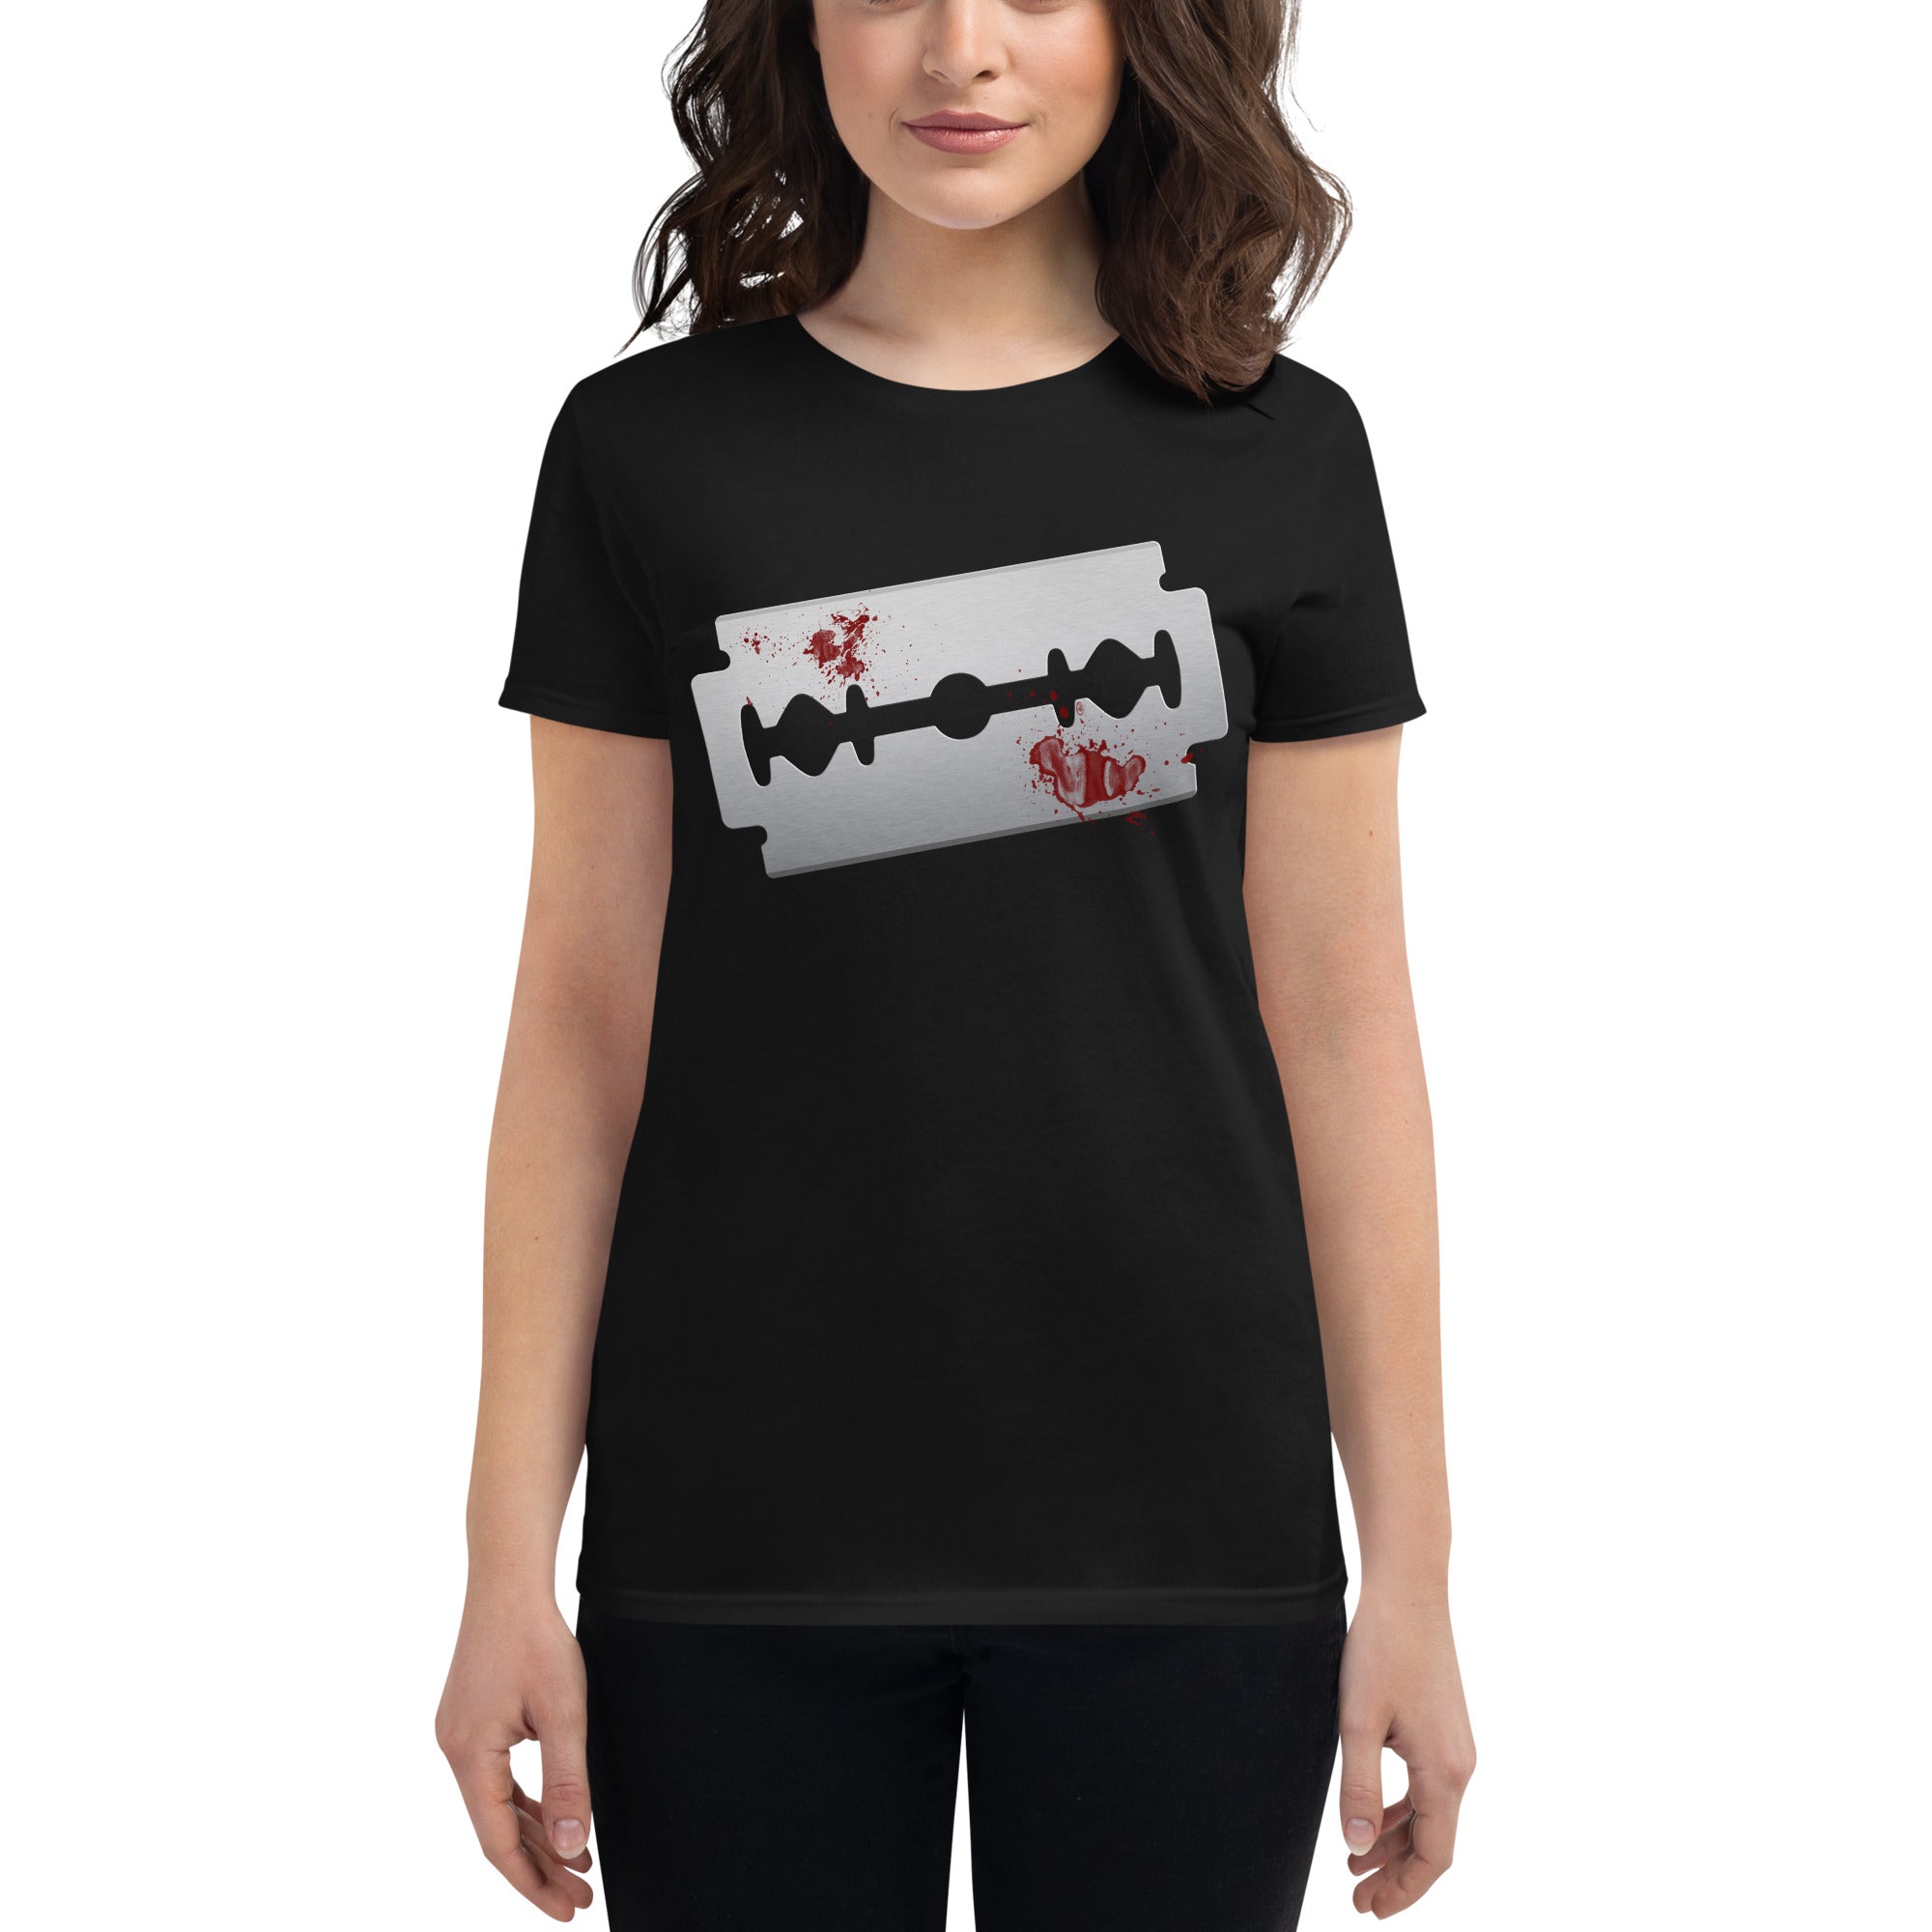 Blood Violin Bloody Razor Blade Horror Women's Short Sleeve Babydoll T-shirt